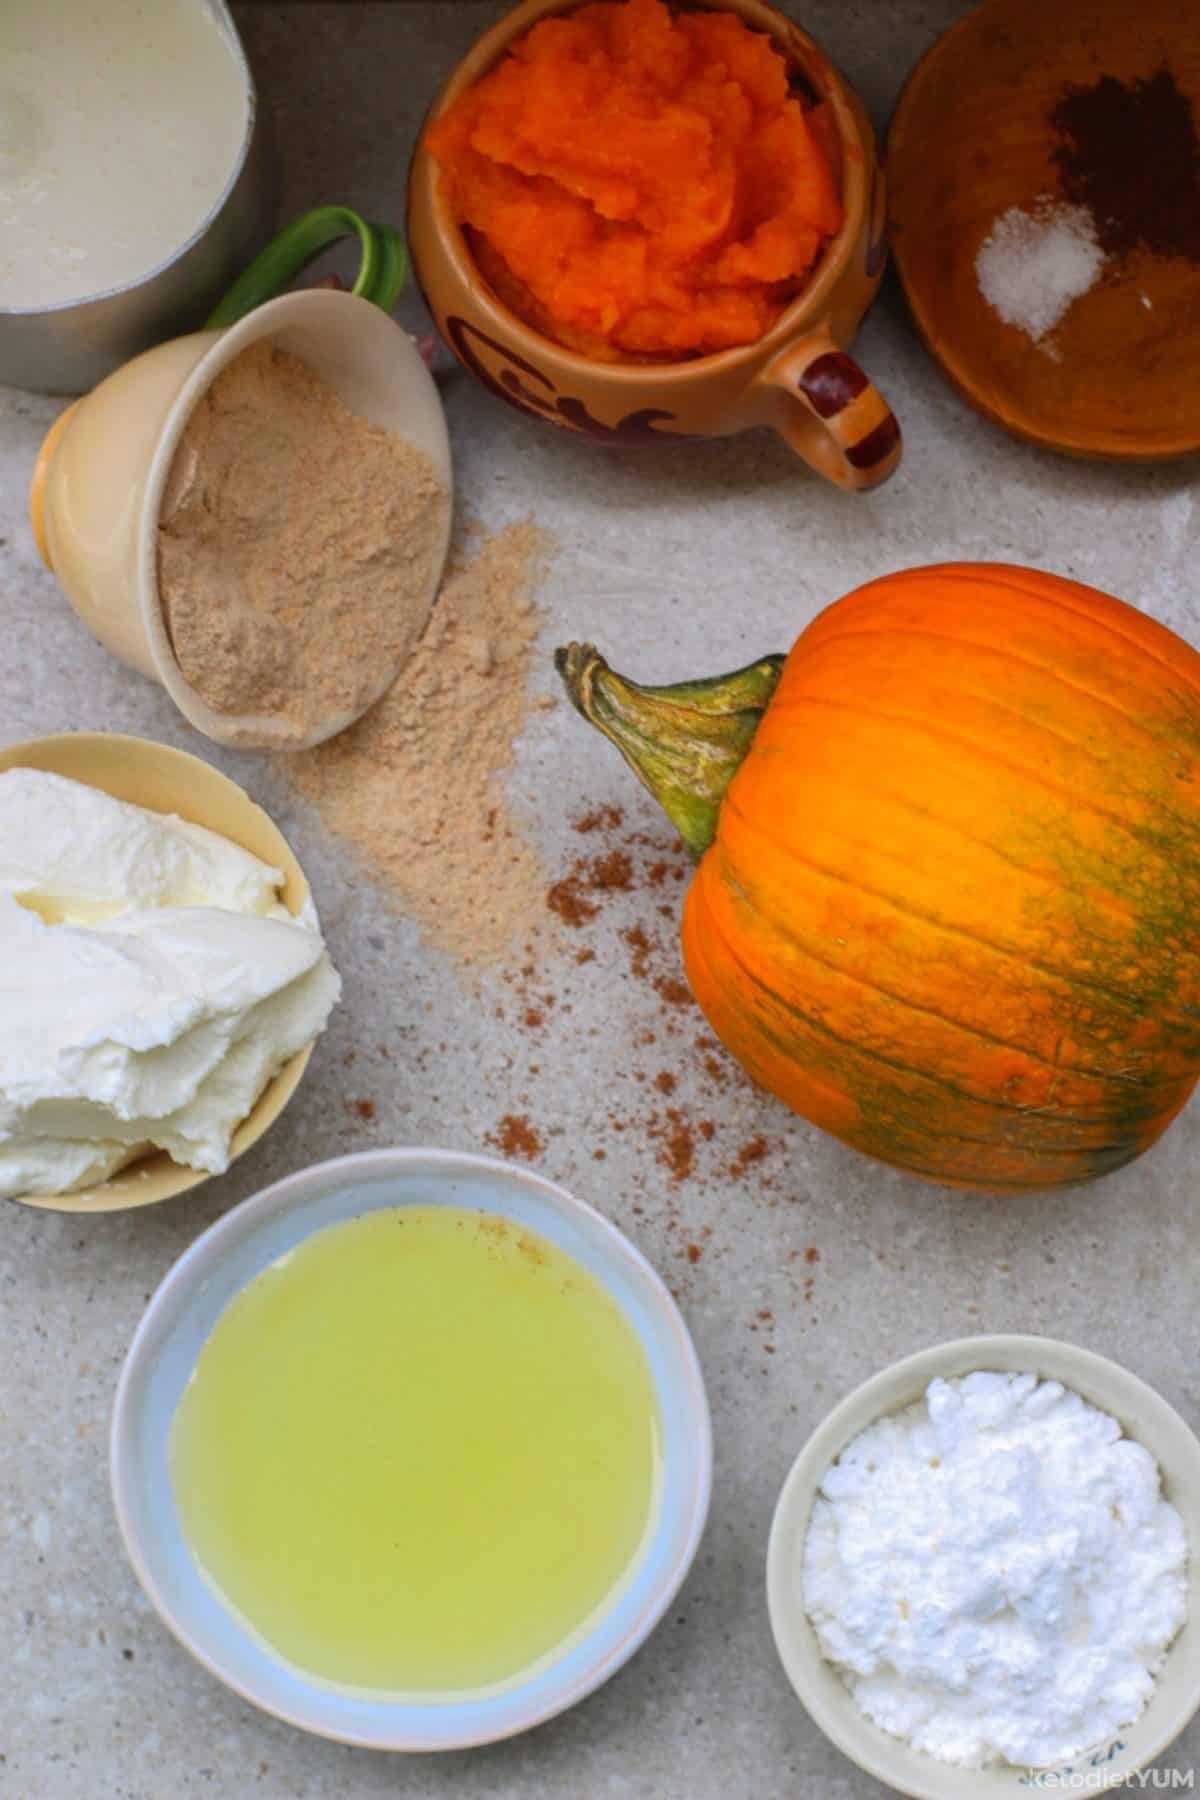 Ingredients to make a no-bake keto pumpkin cheesecake